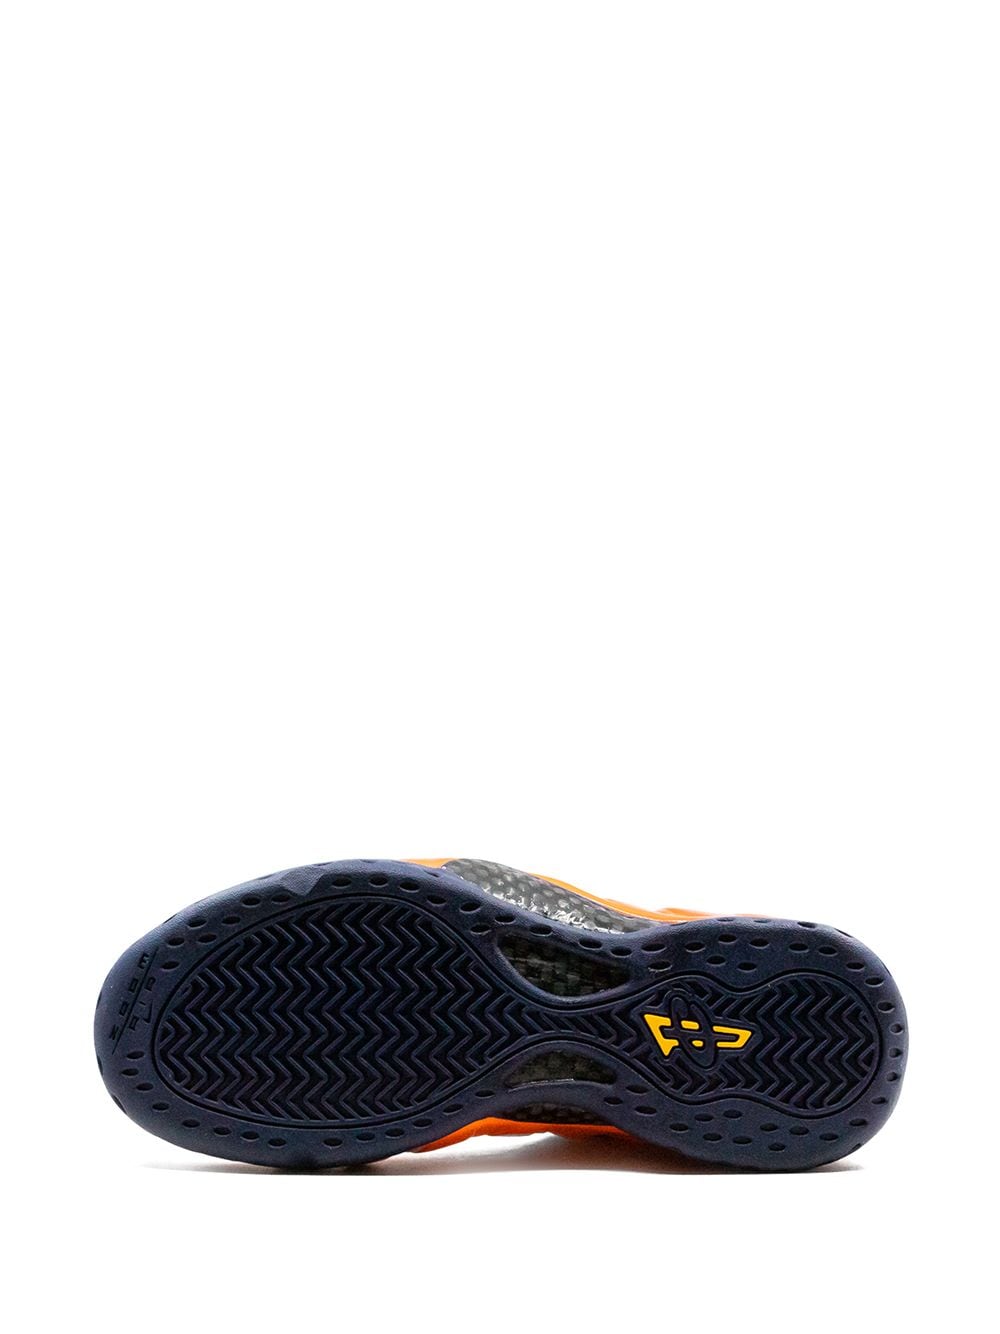 Shop Nike Air Foamposite One "rugged Orange" Sneakers